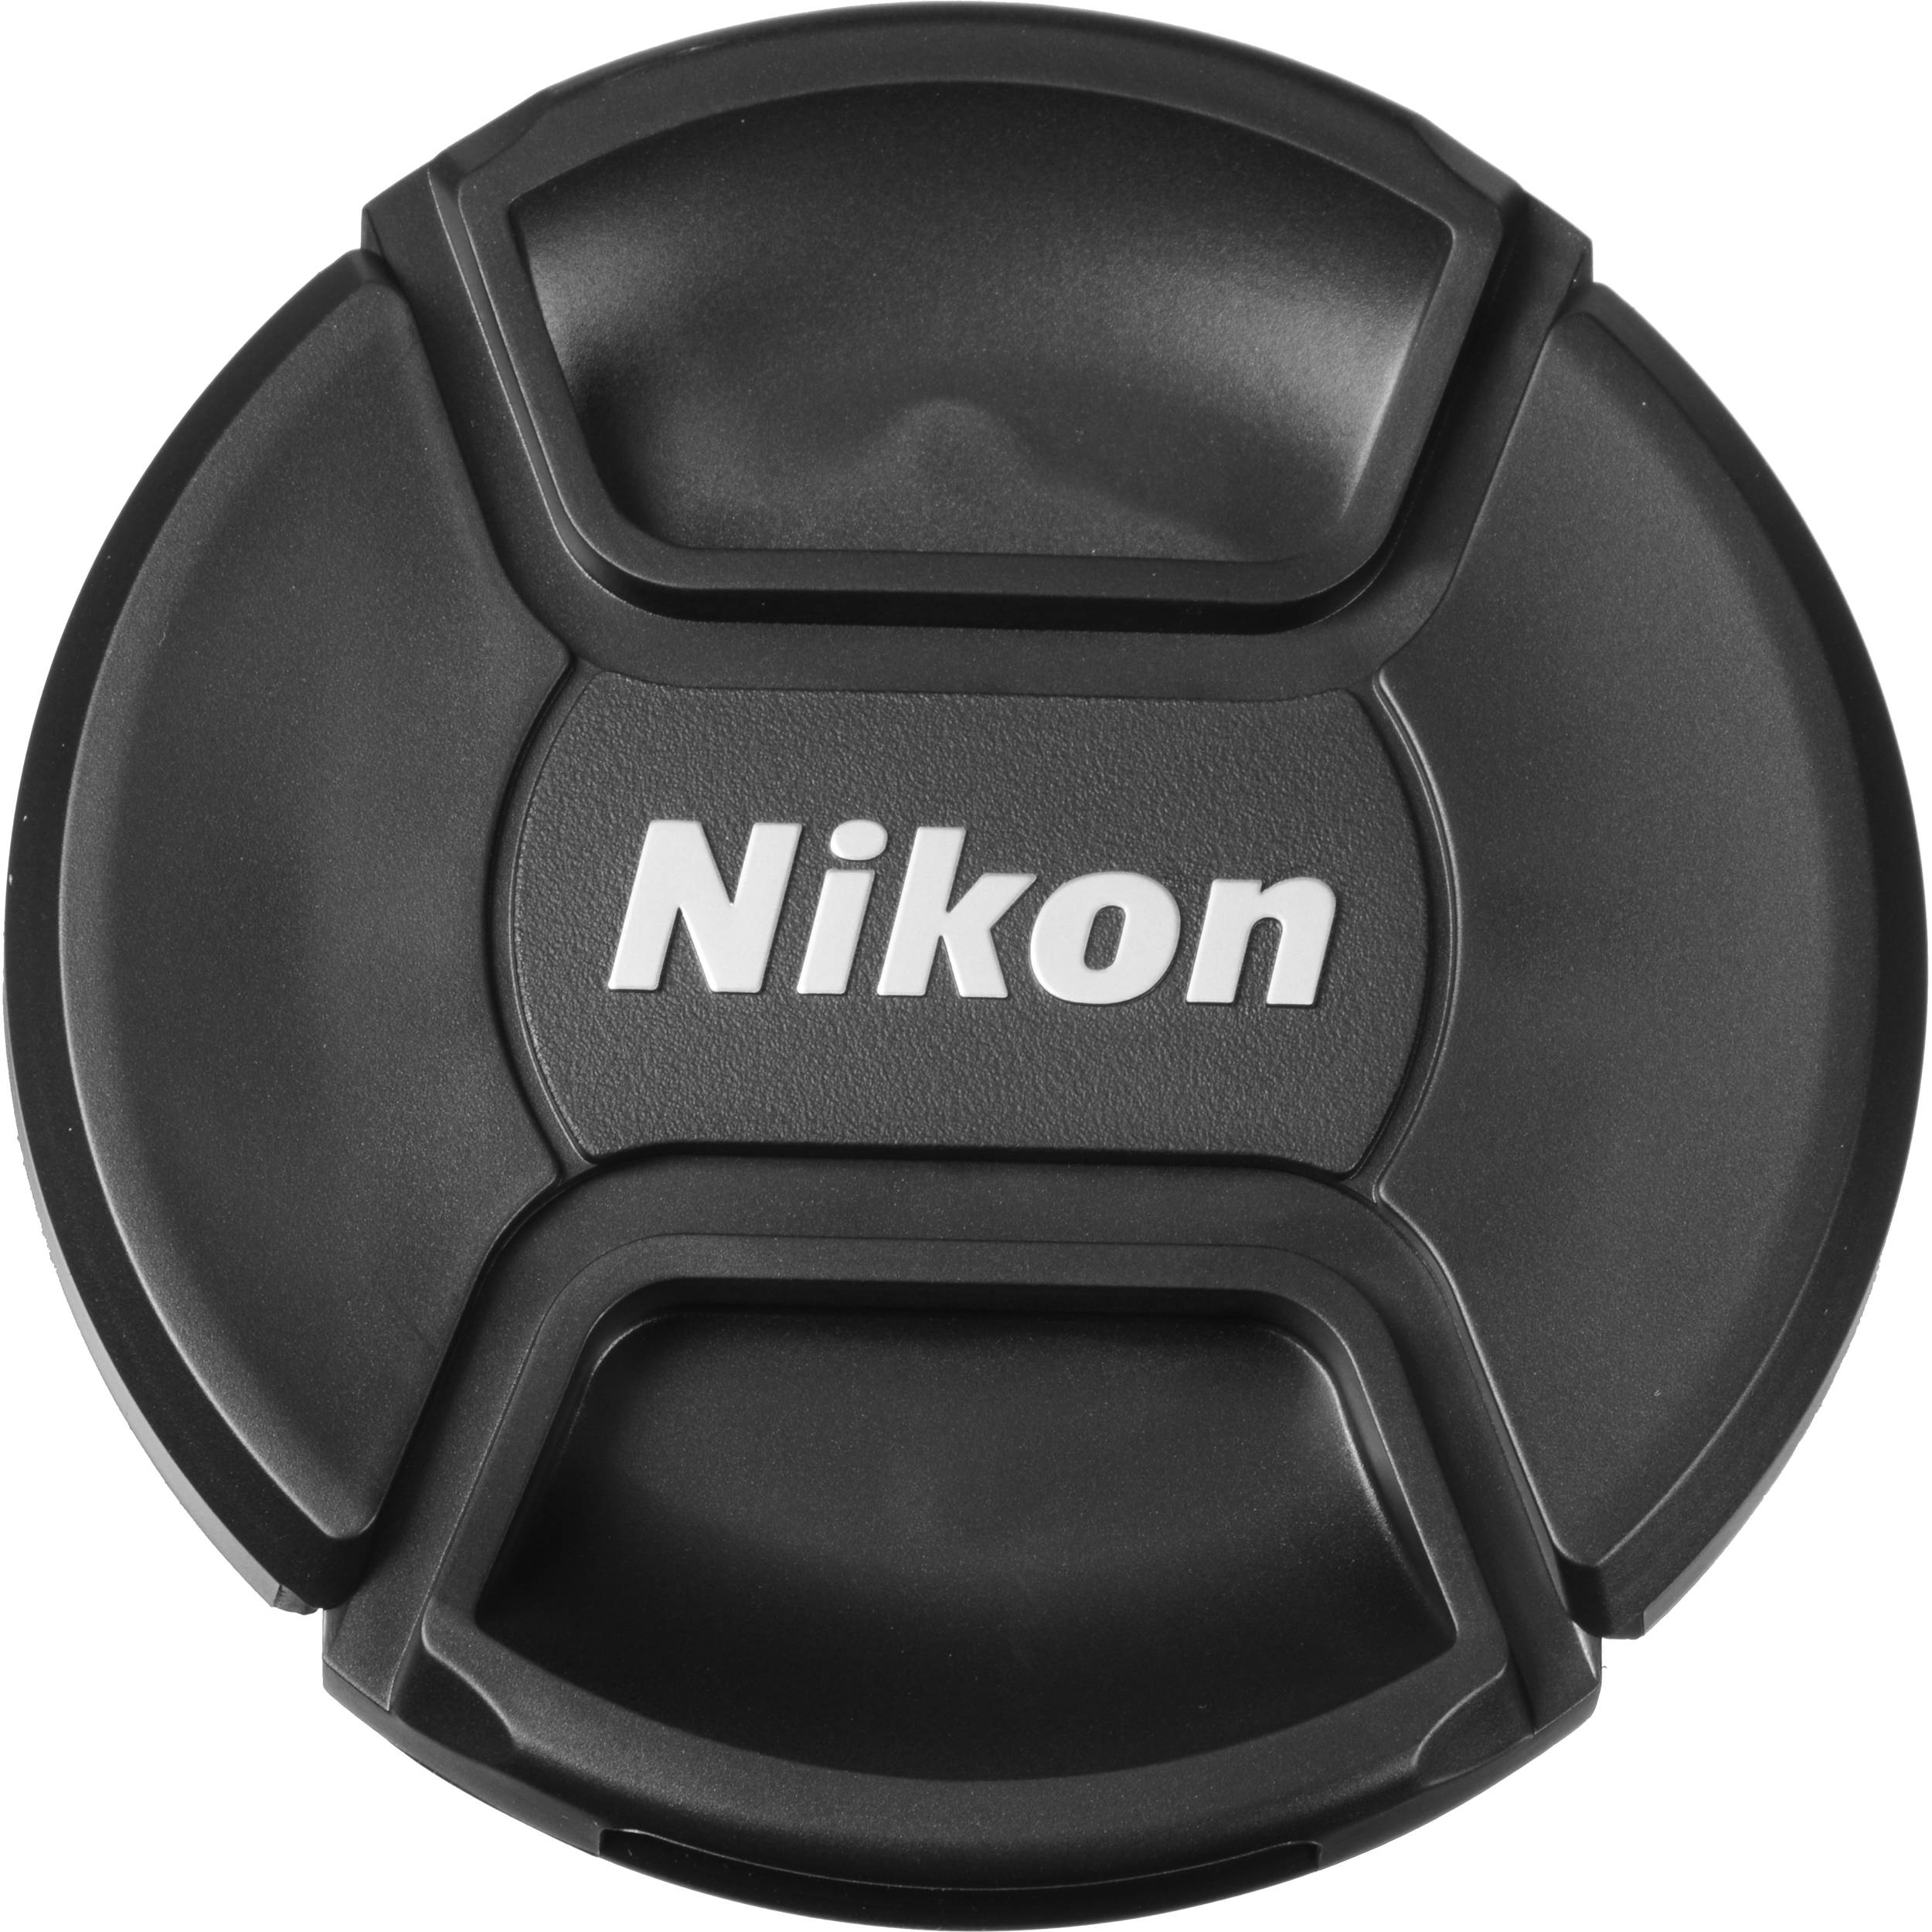 Nikon 82mm Snap-On Lens Cap 4132 B&H Photo Video